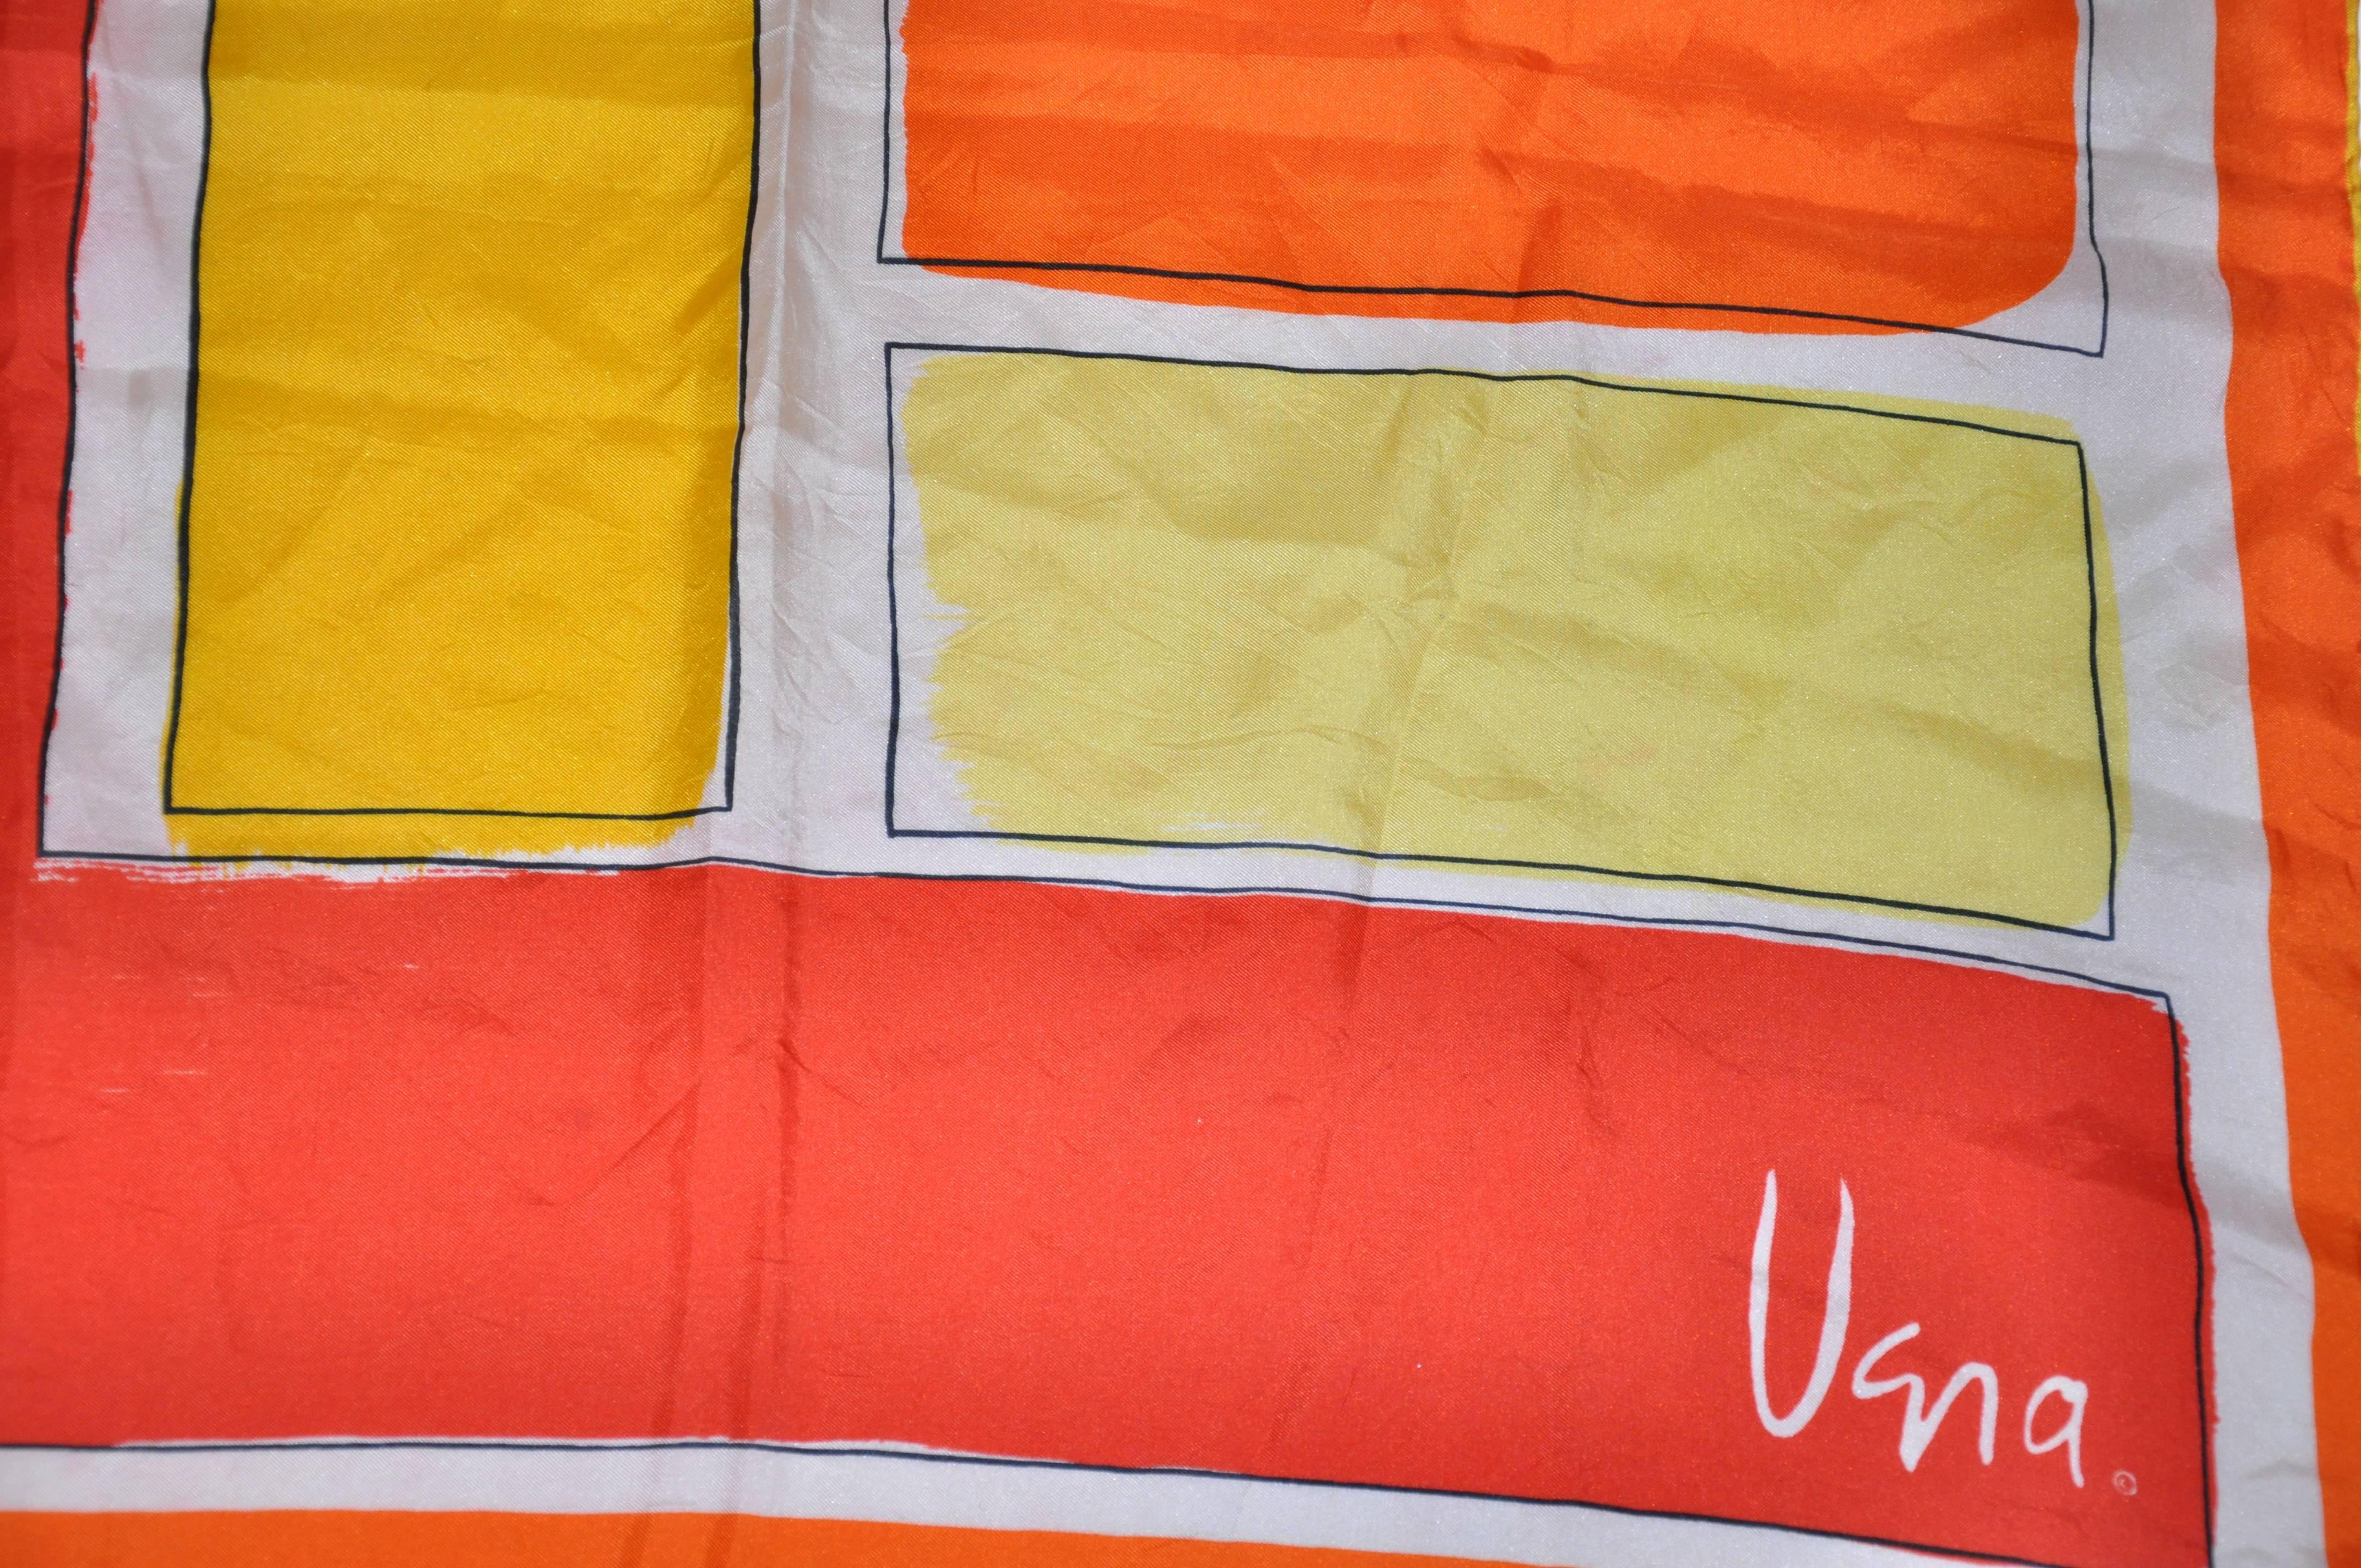        L'écharpe en soie Vera Bold Yellow & Orange color block mesure 26